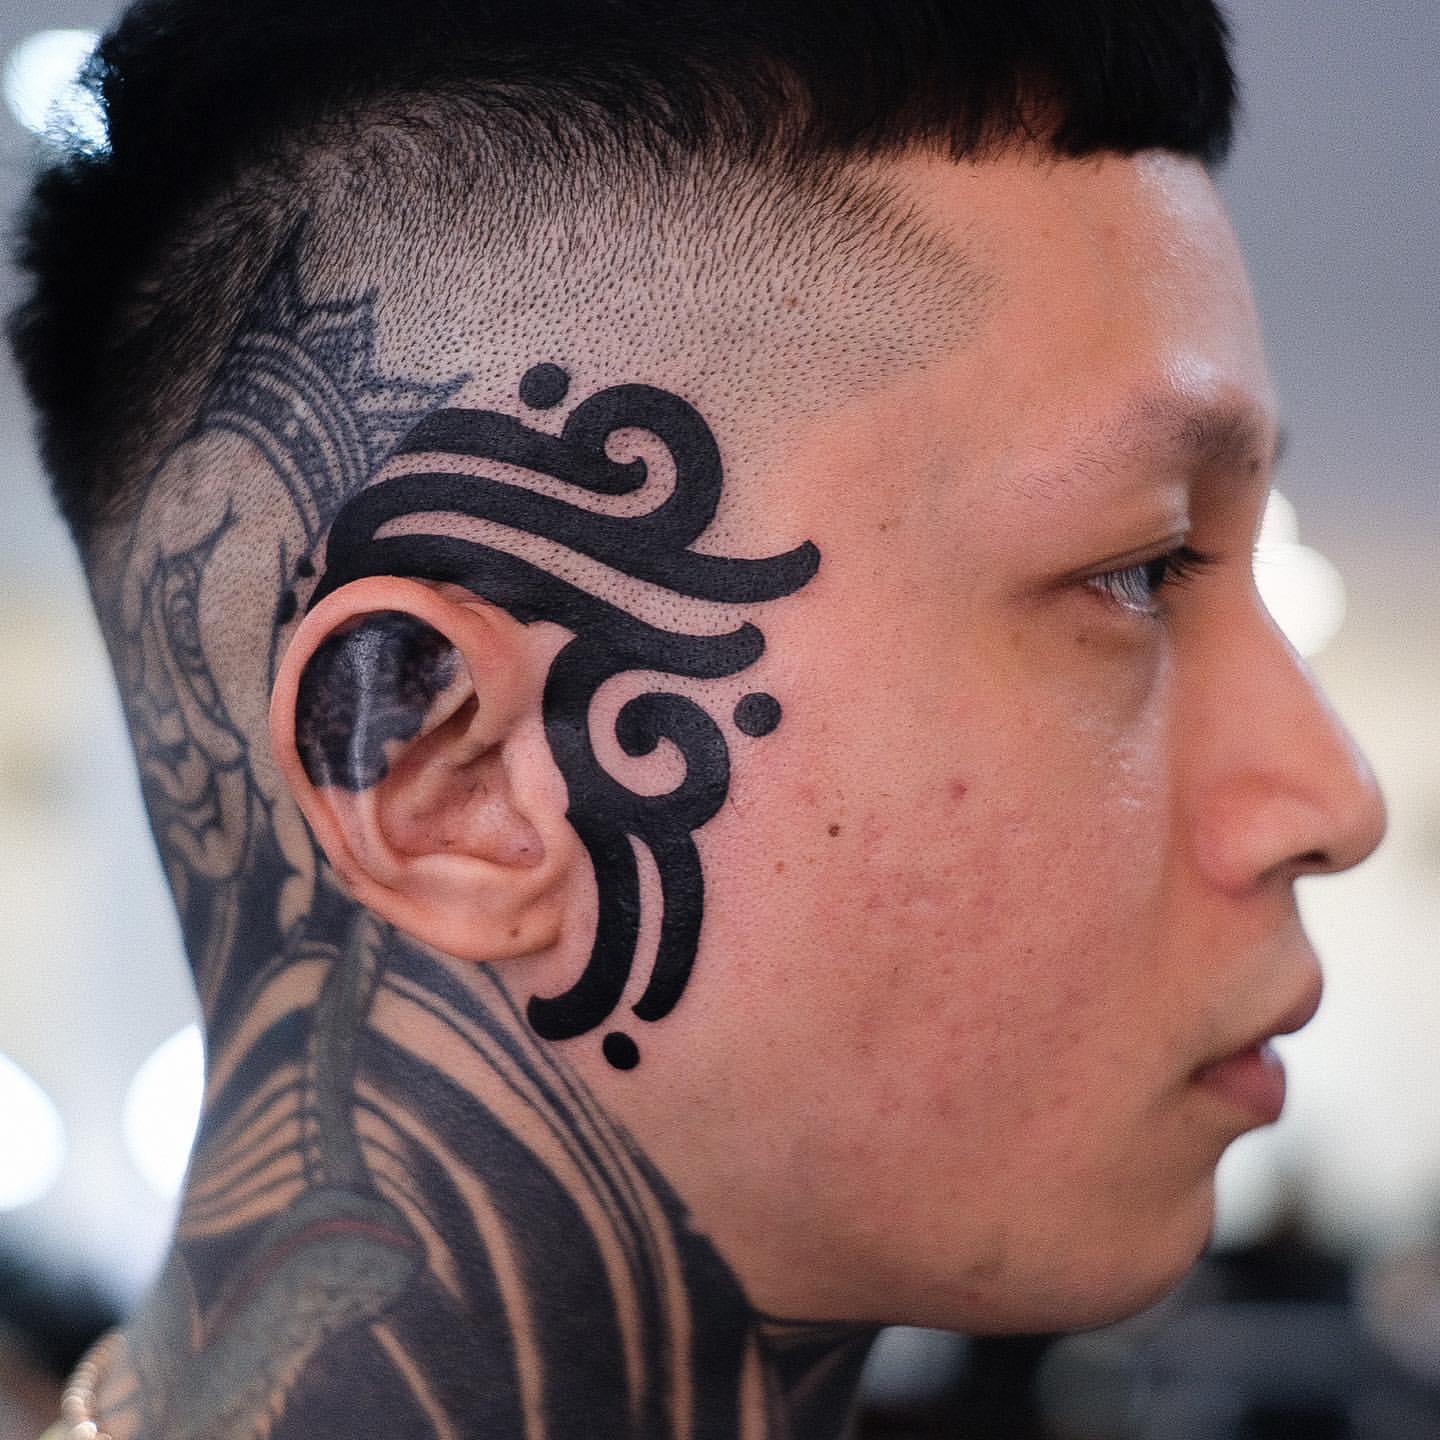 Face tattoo #1 : r/bodymods